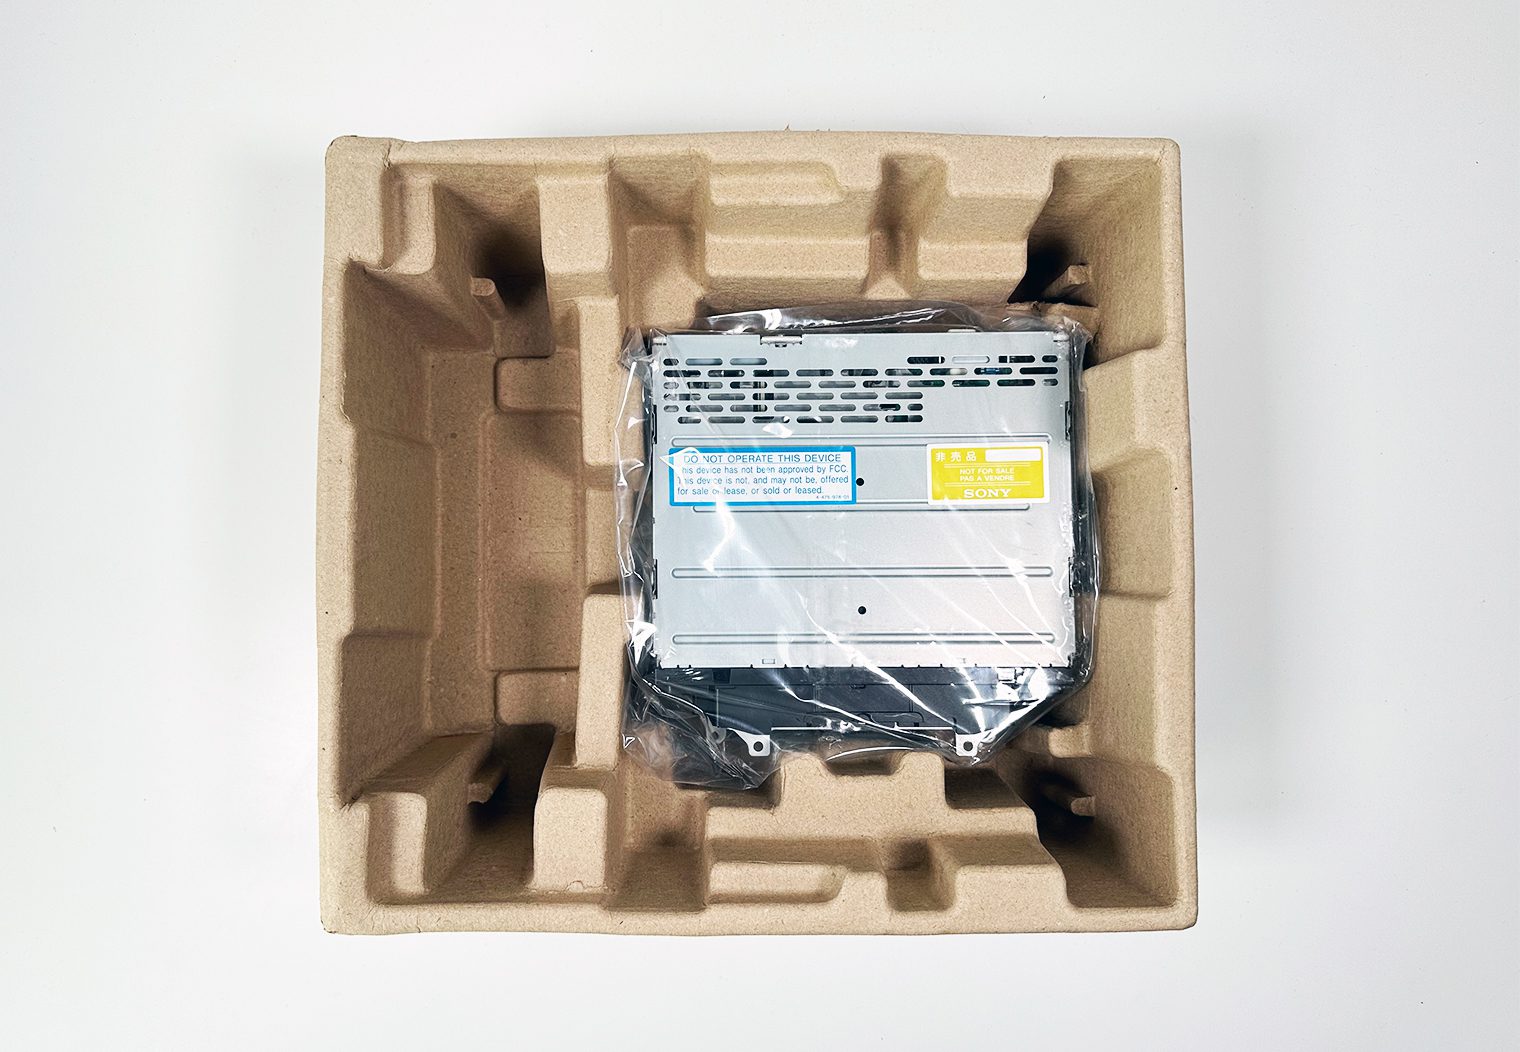 Sony XAV-AX8500 chassis in box